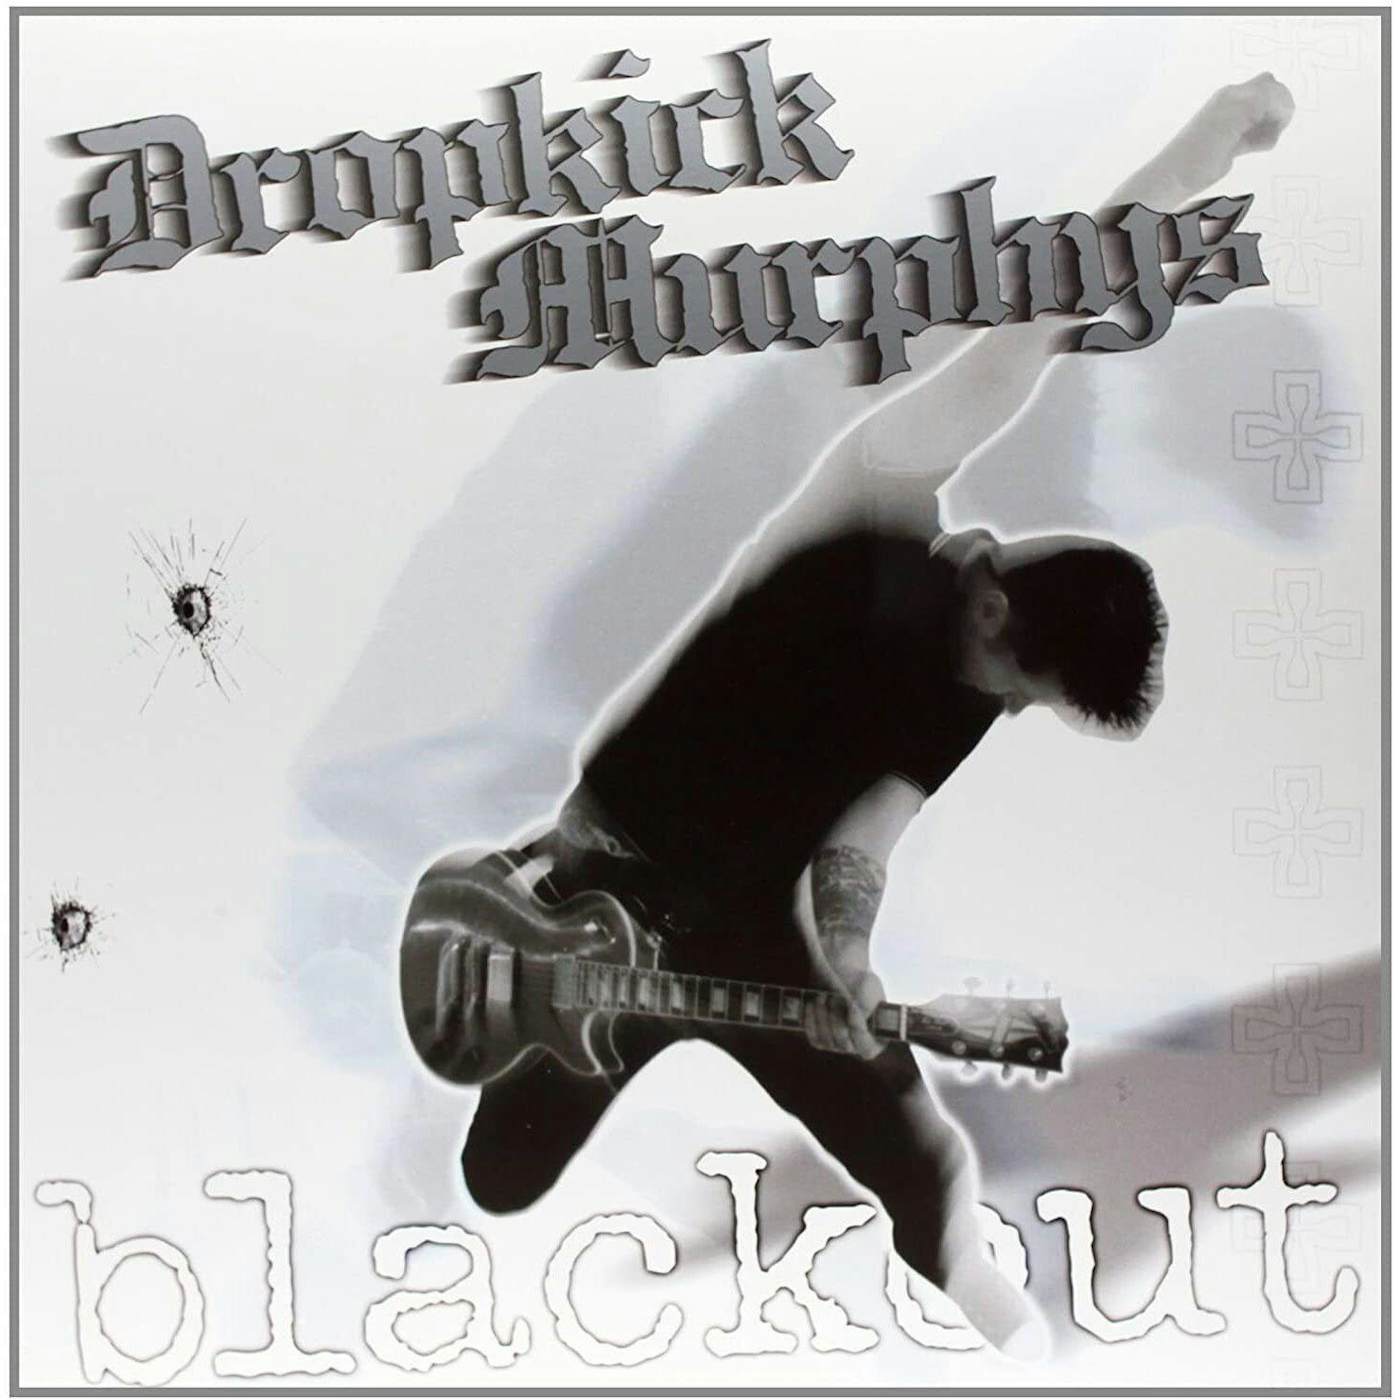 Dropkick Murphys Blackout (Anniversary Edition/Red Vinyl Record)